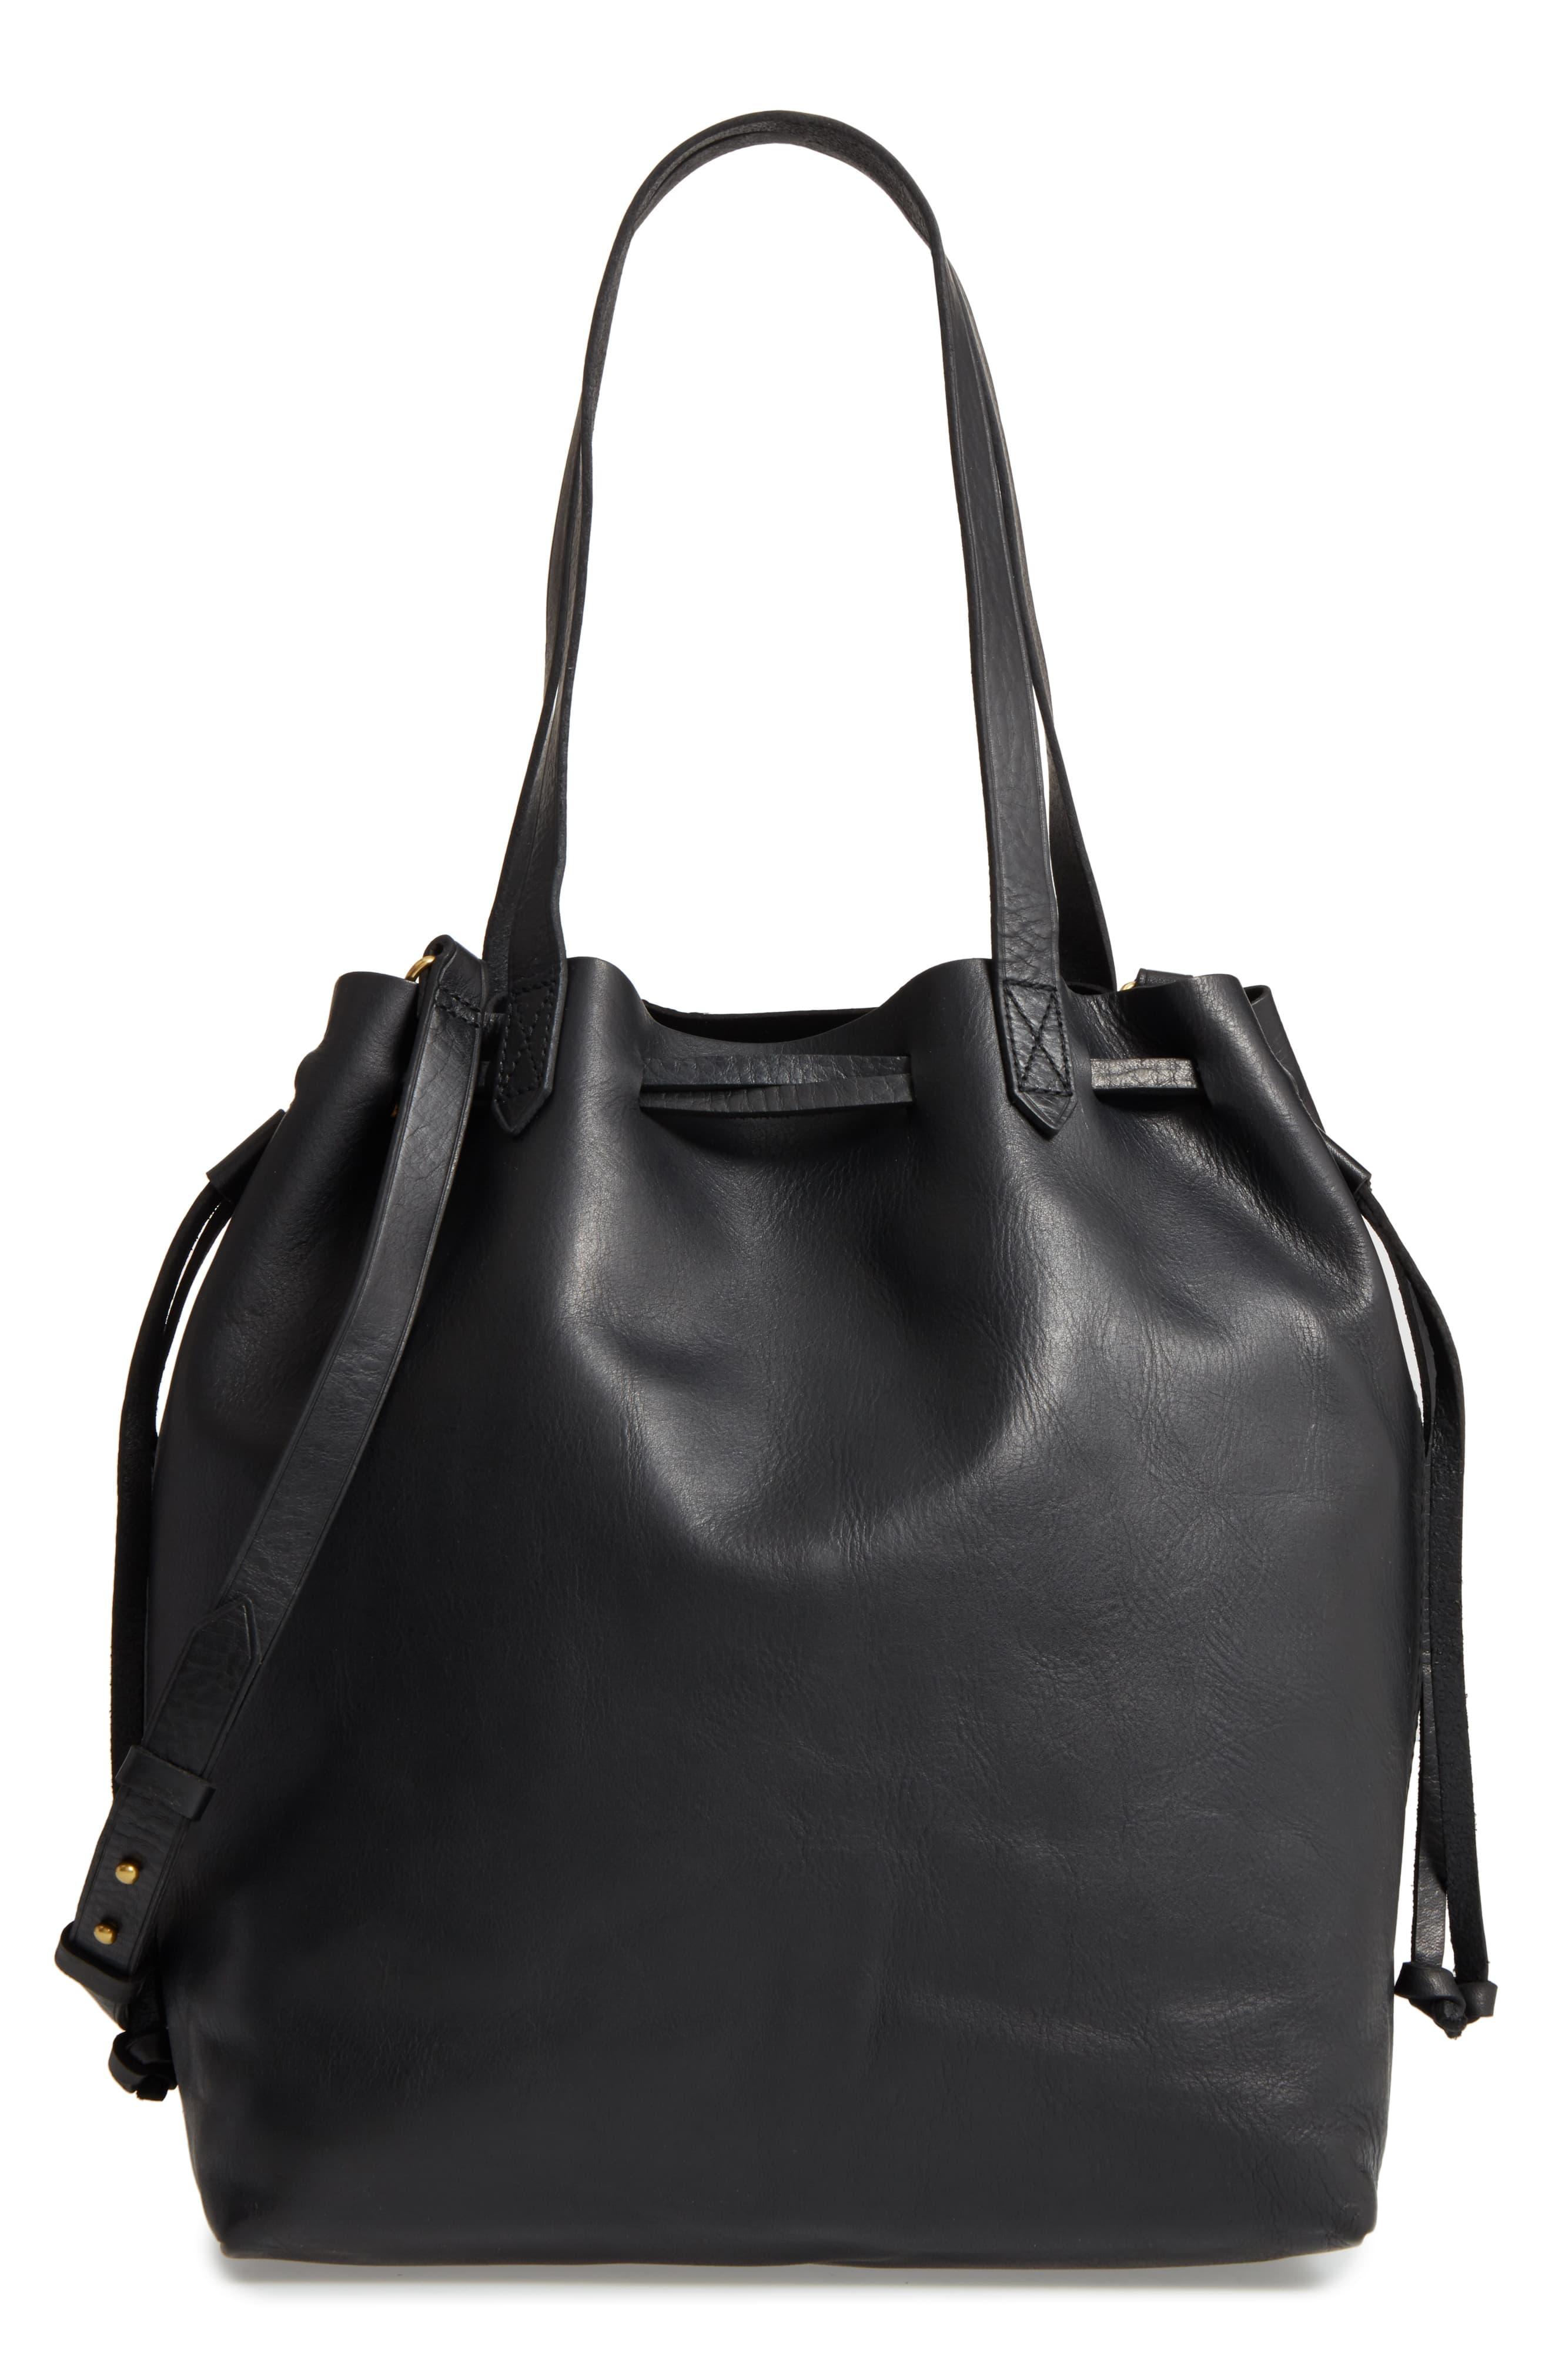 Madewell Medium Transport Leather Bucket Bag in Black - Lyst